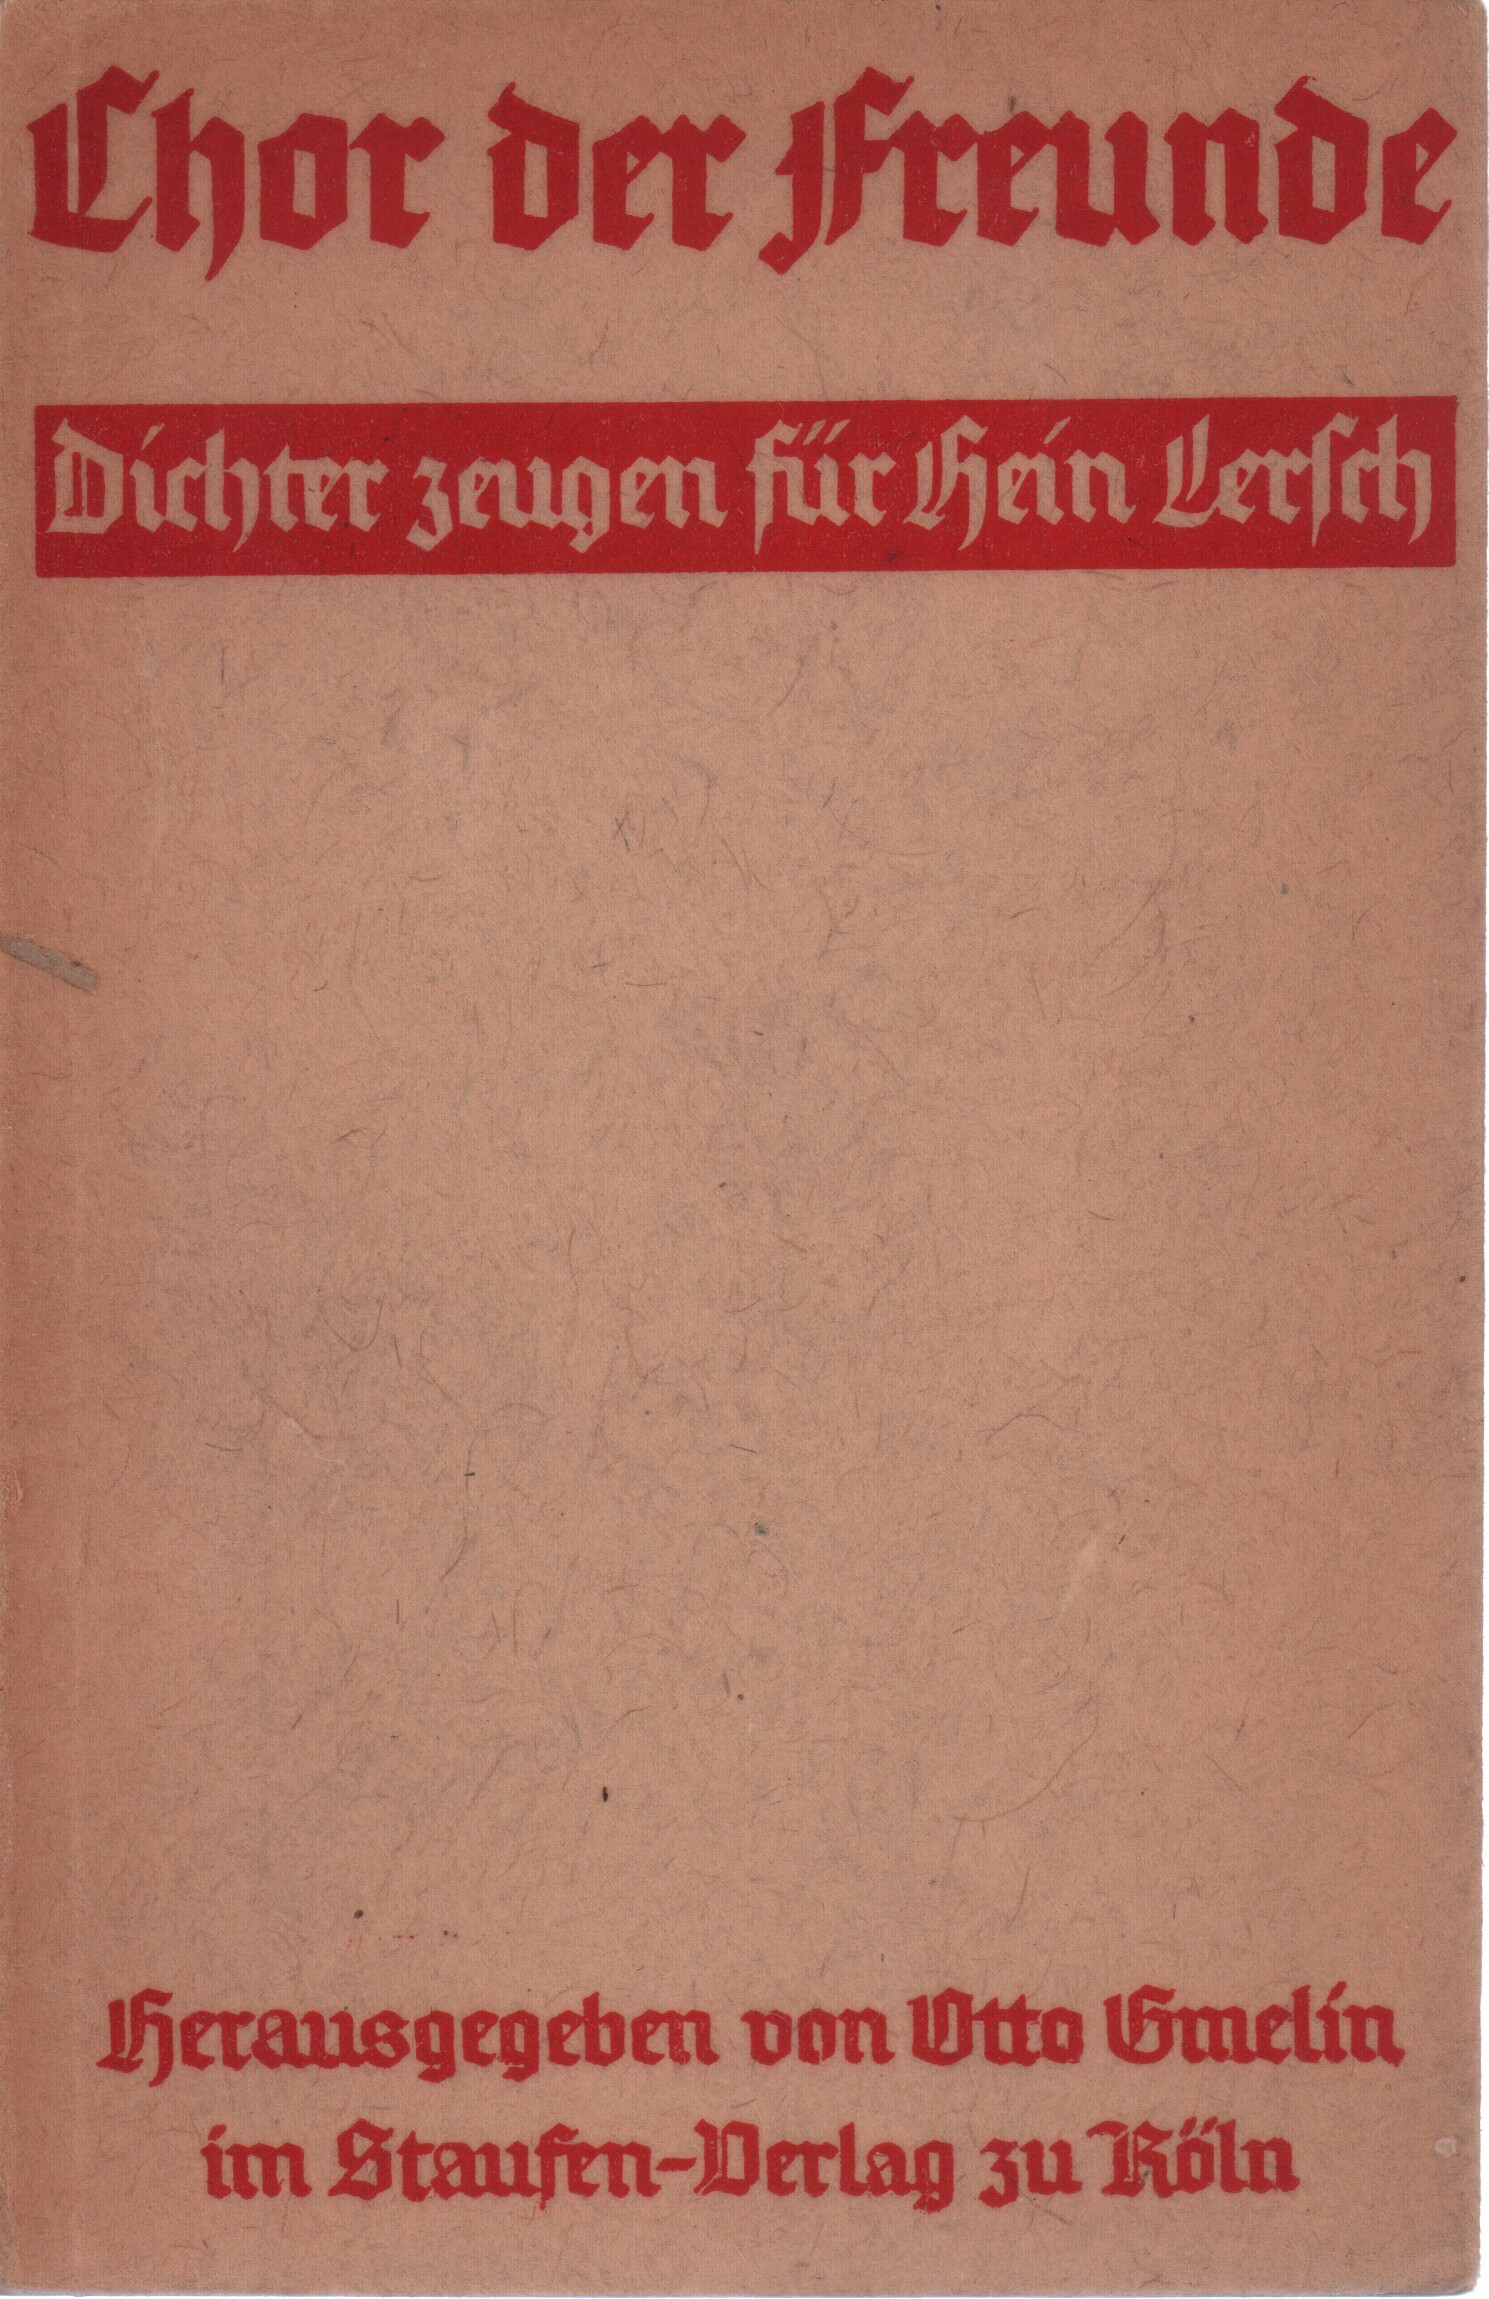 Buch Chor der Freunde (Heimatarchiv Bad Bodendorf CC BY-NC-SA)